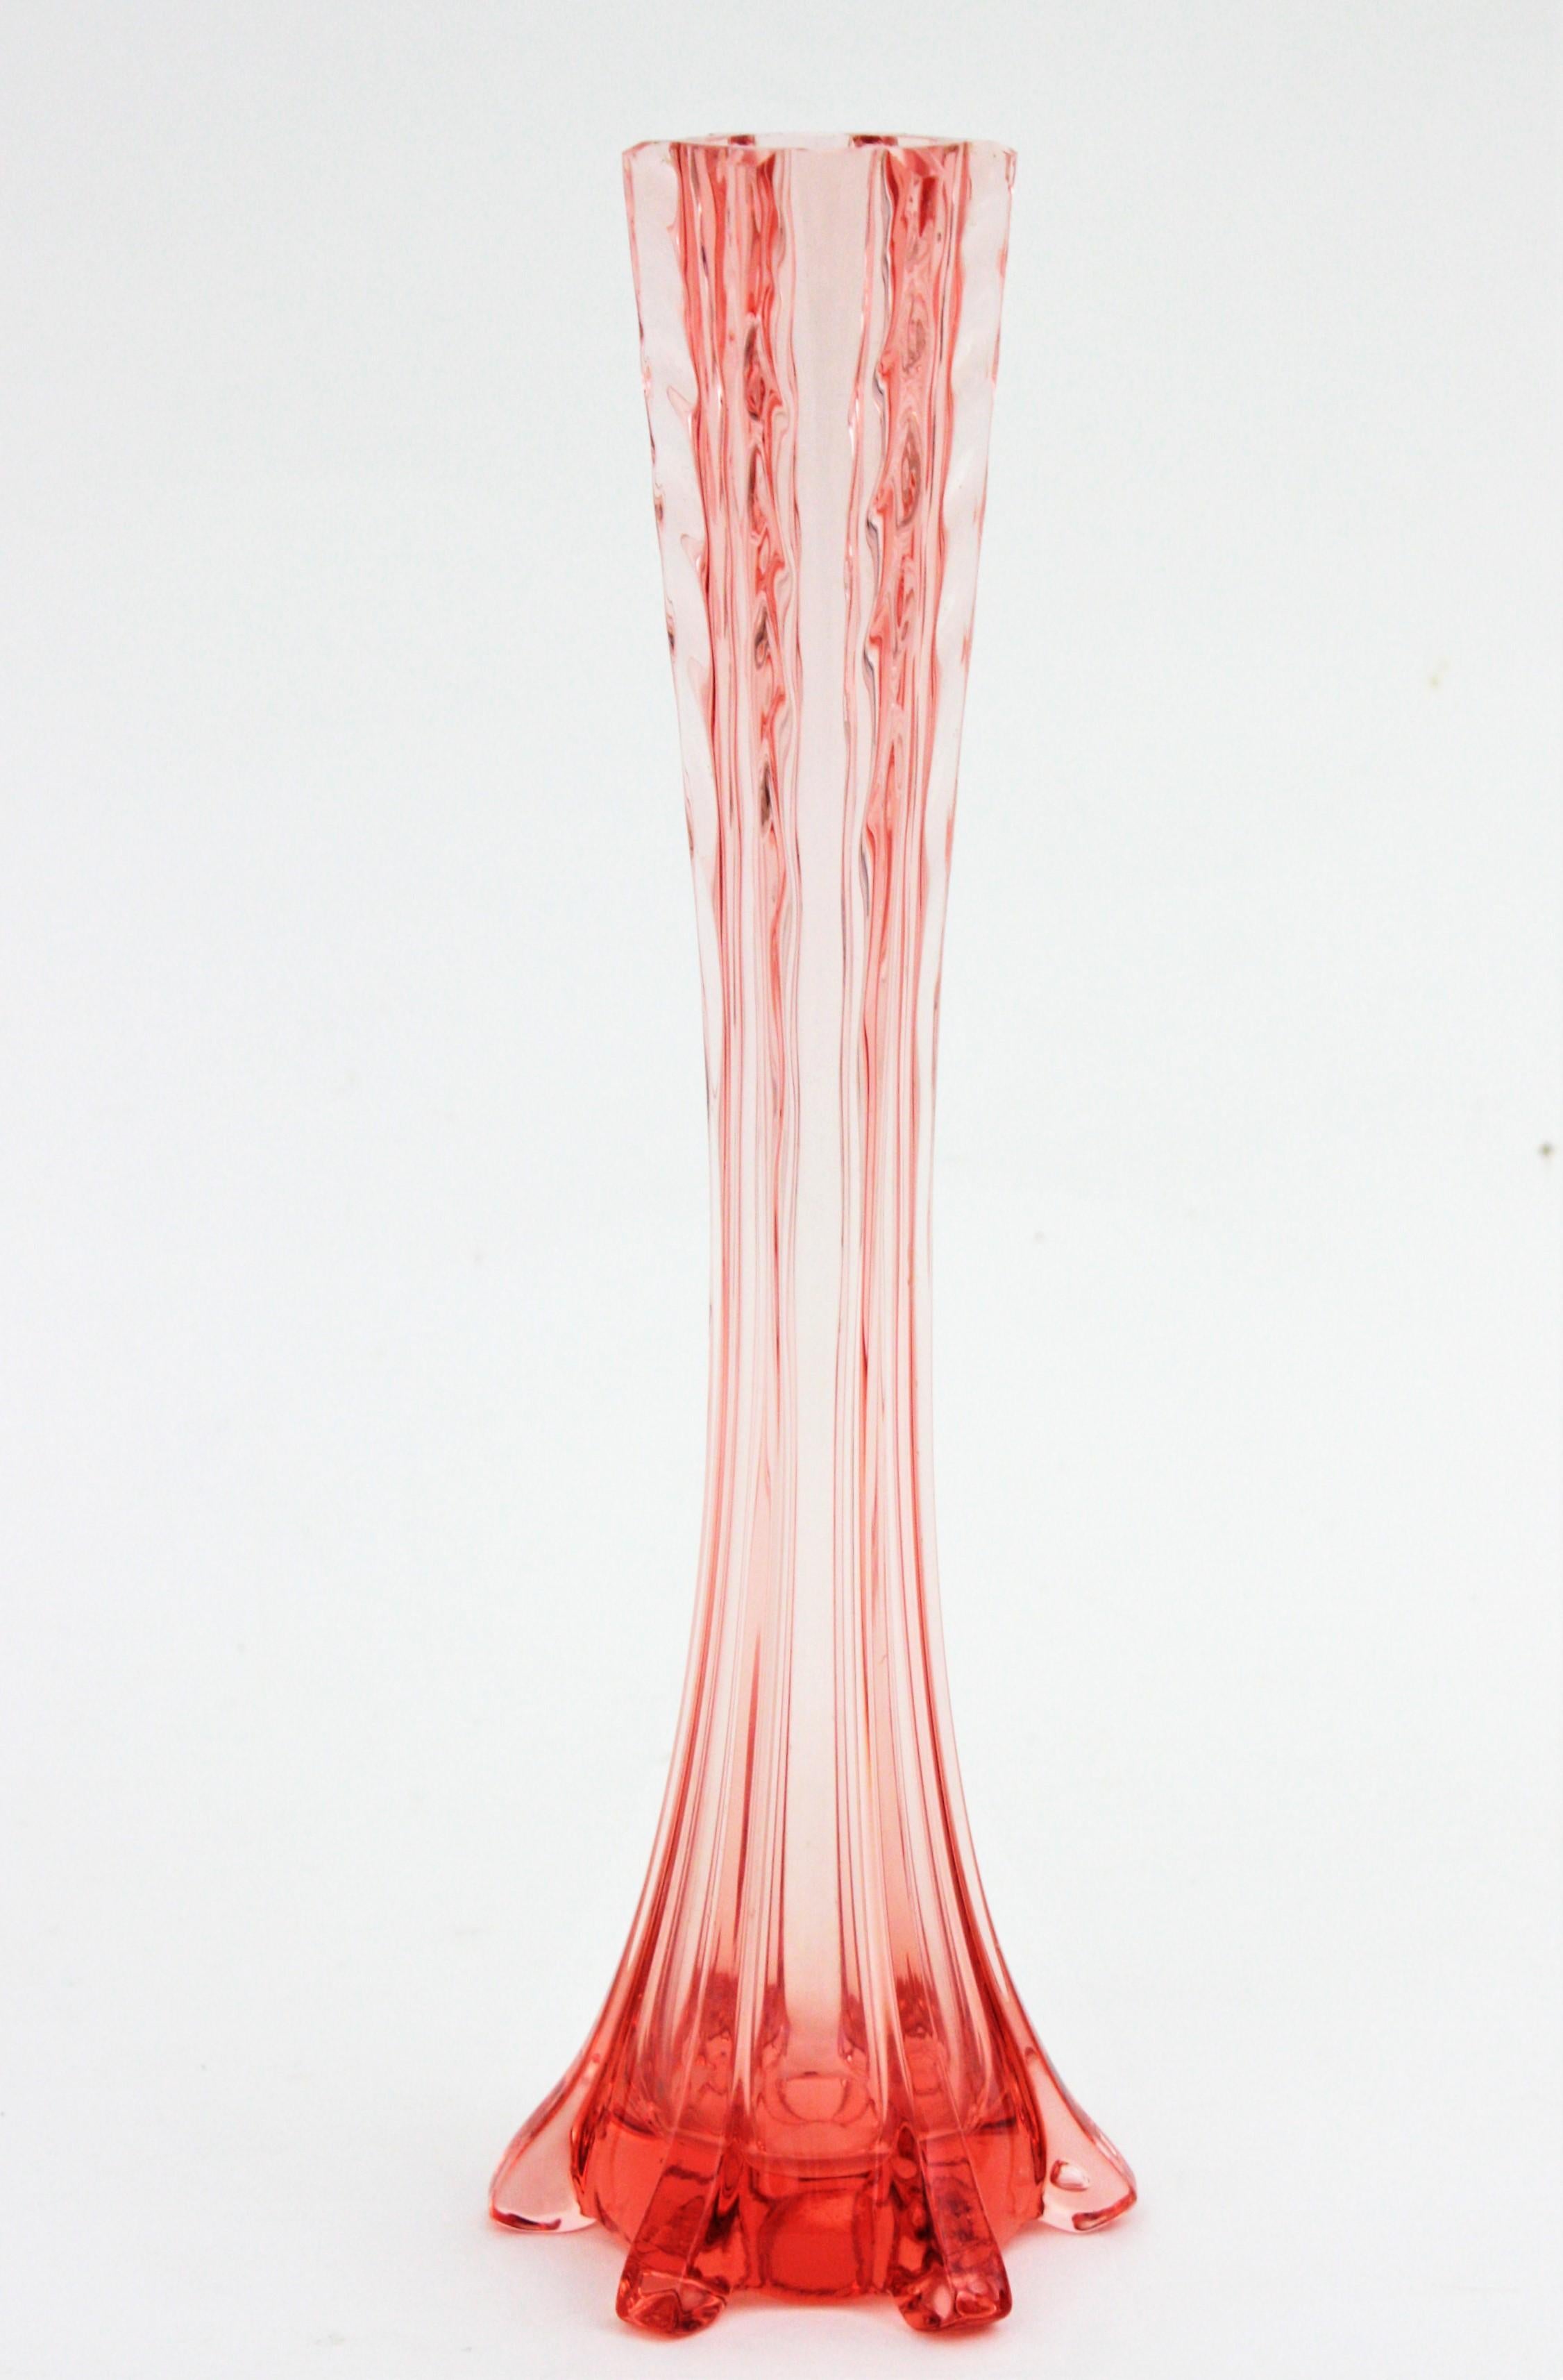 vase with single flower